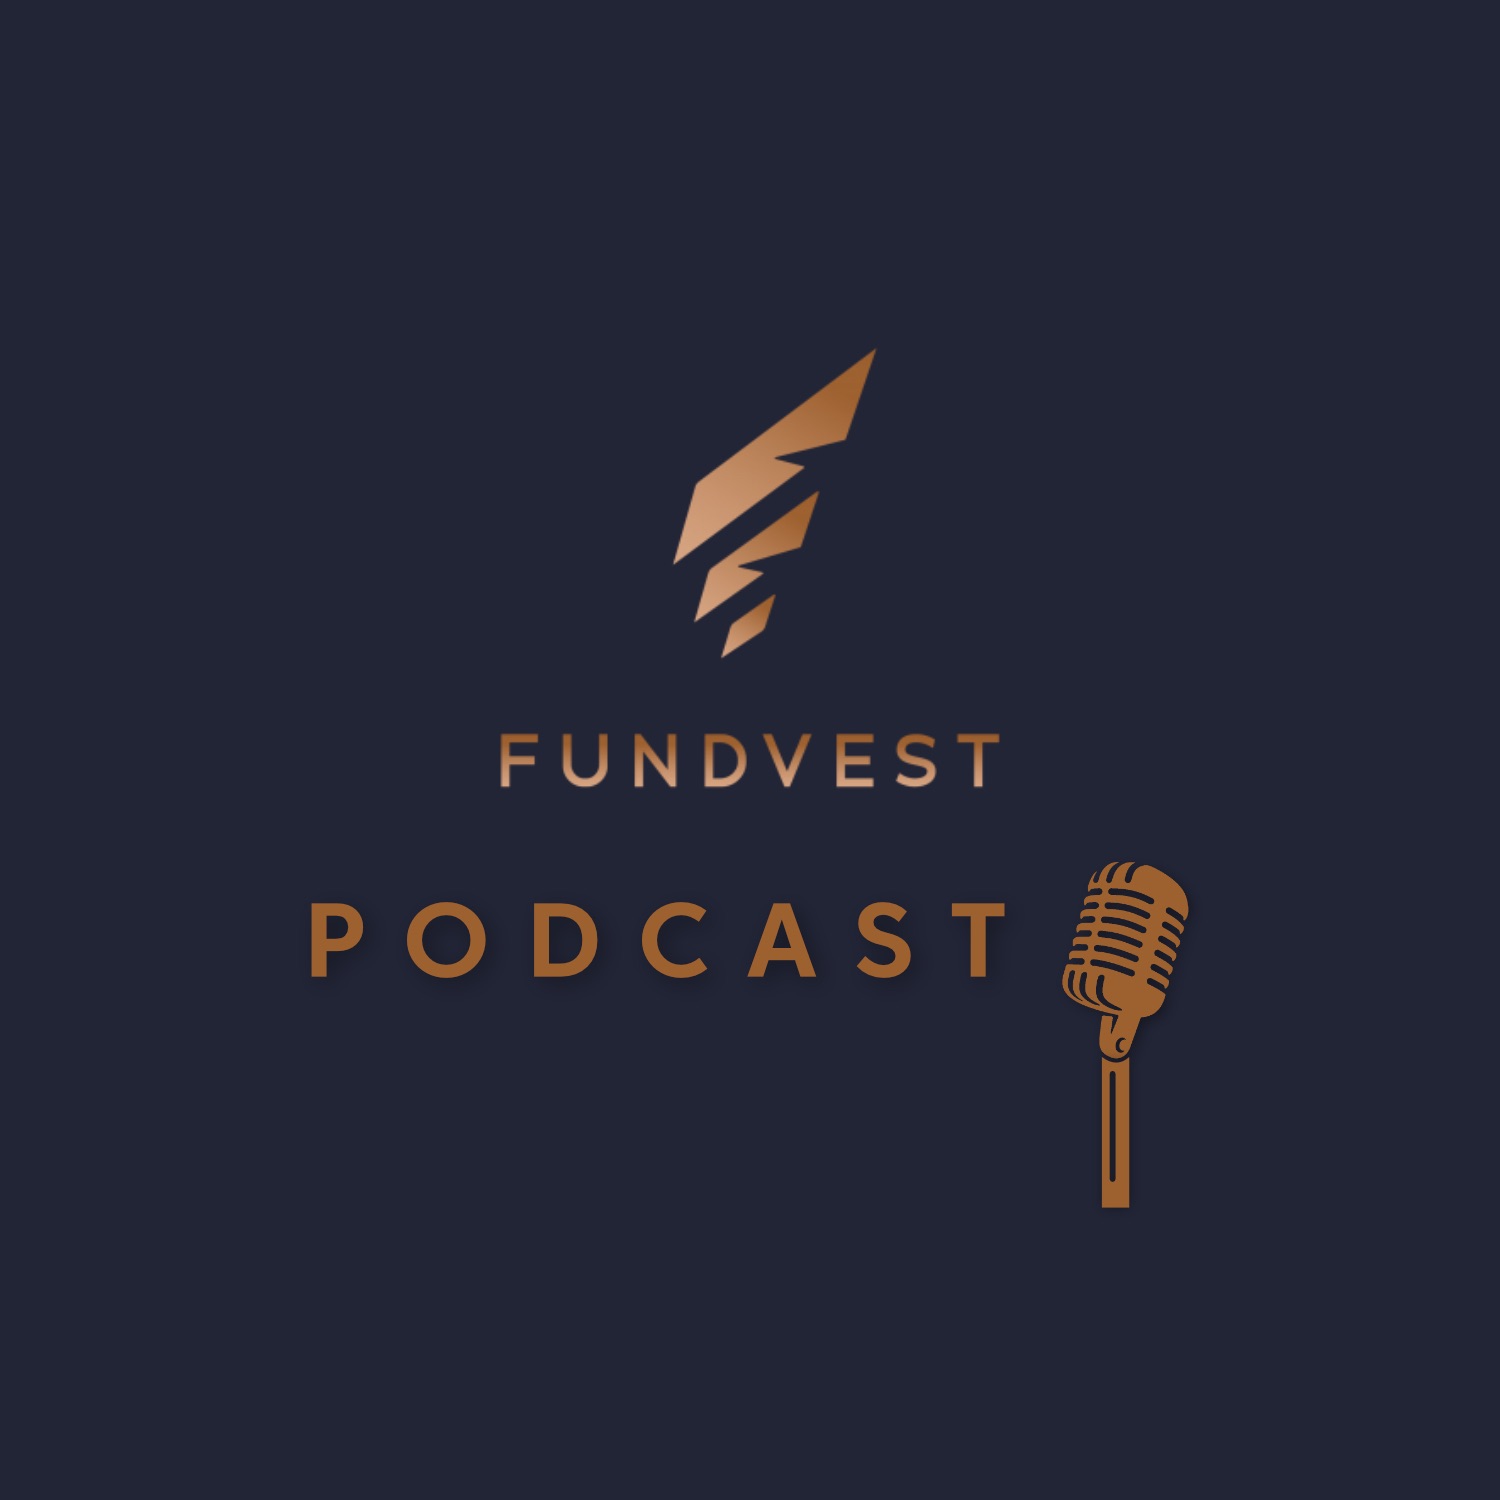 Fundvesti podcast